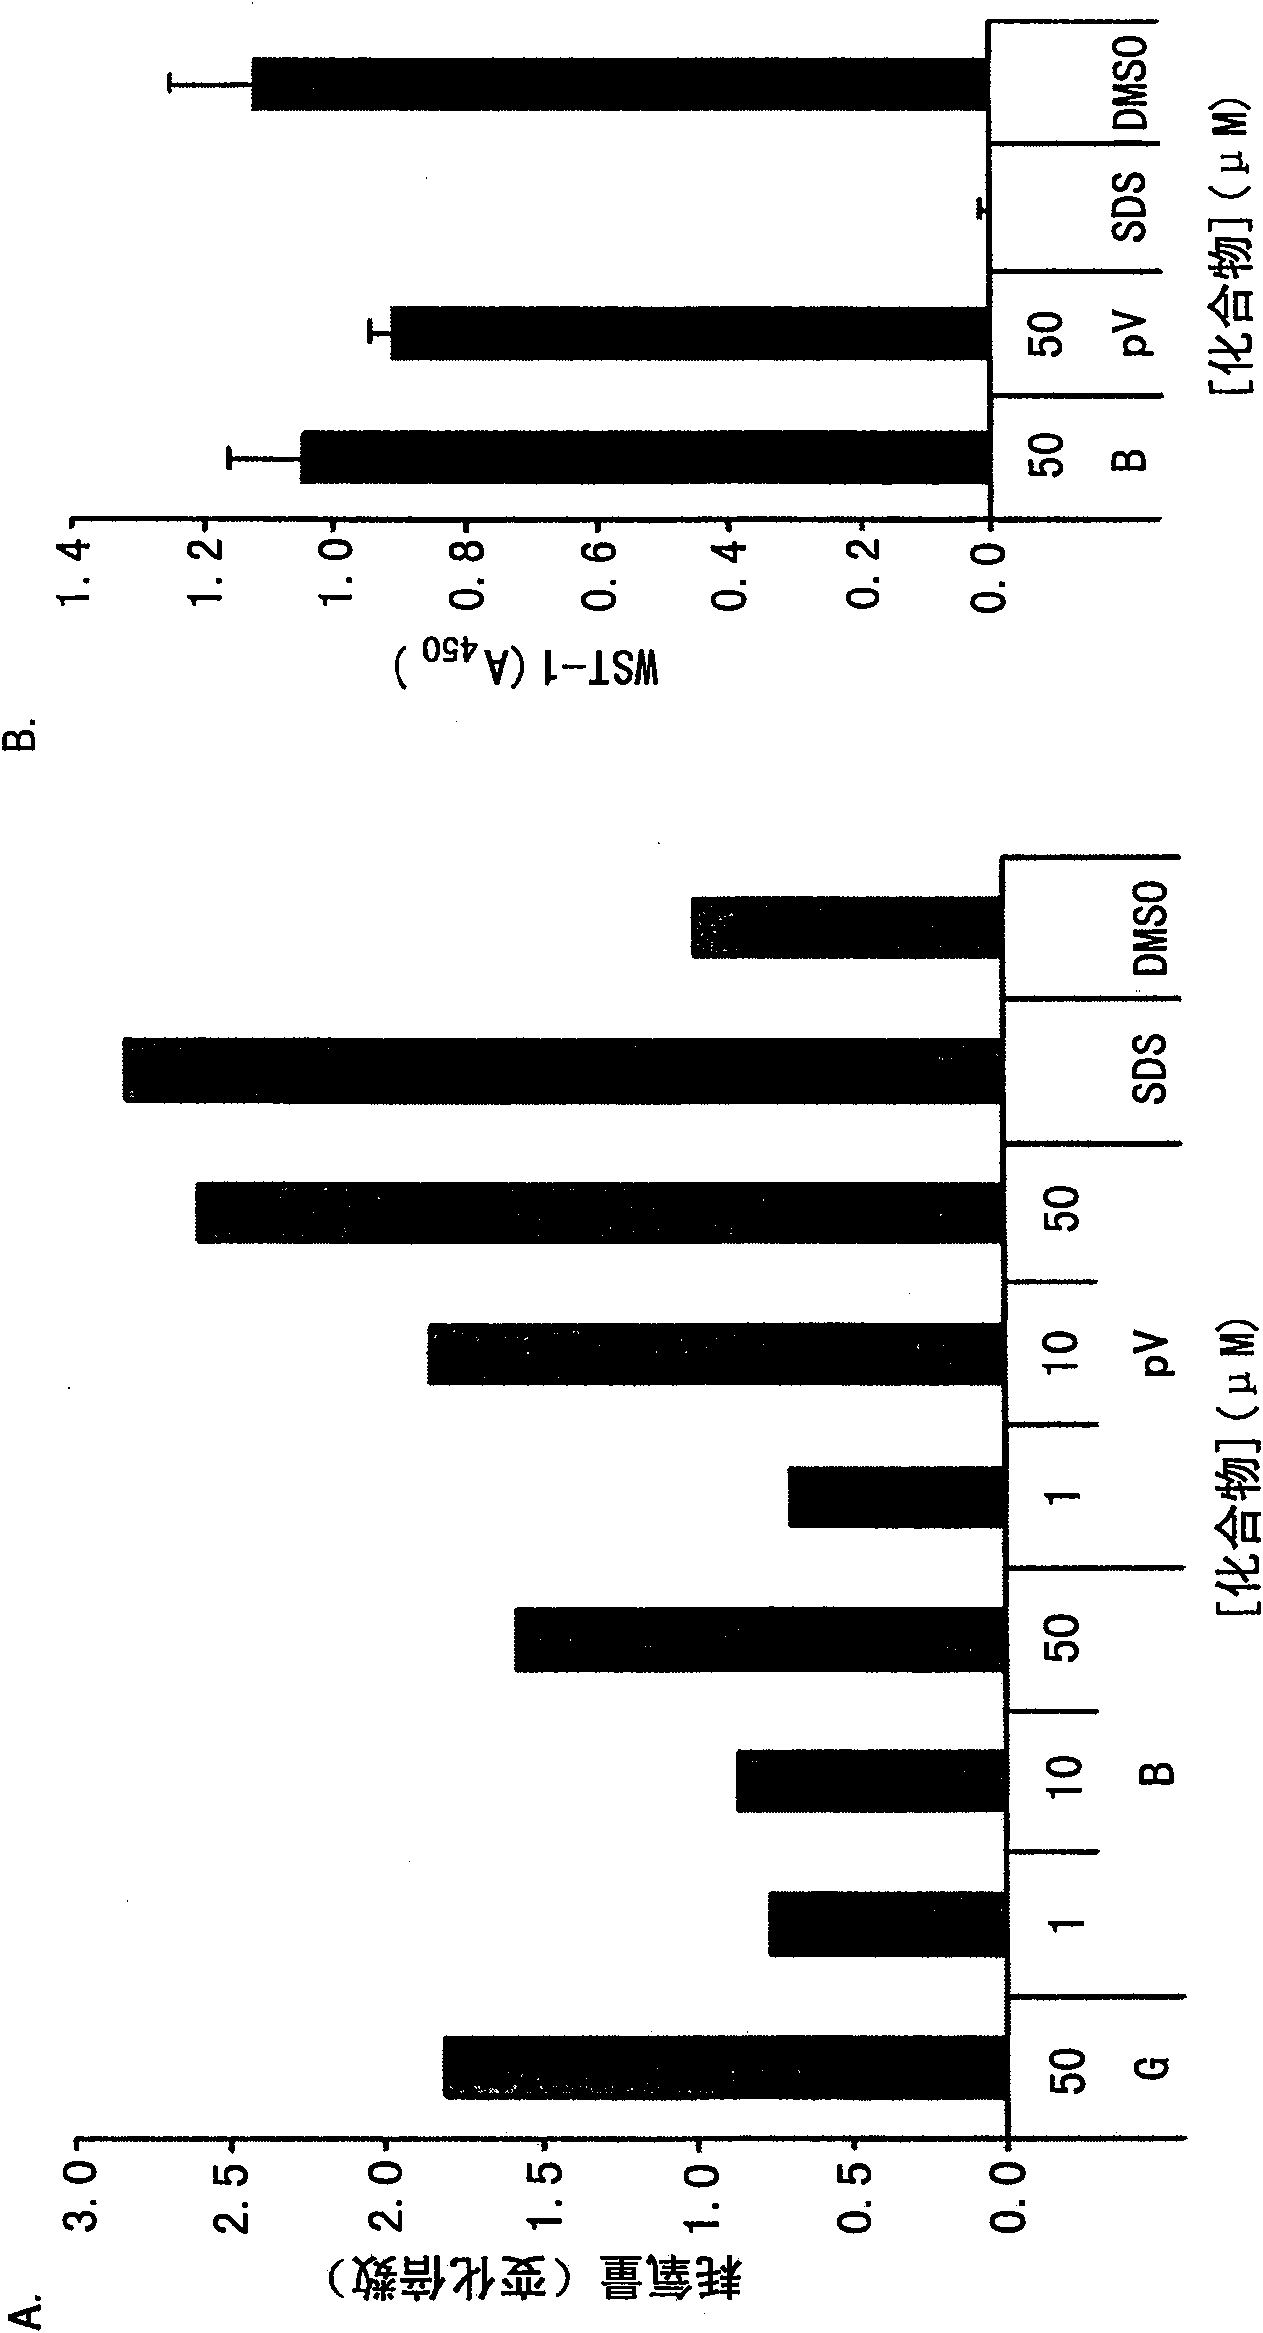 Stabilization of hypoxia inducible factor (HIF) alpha